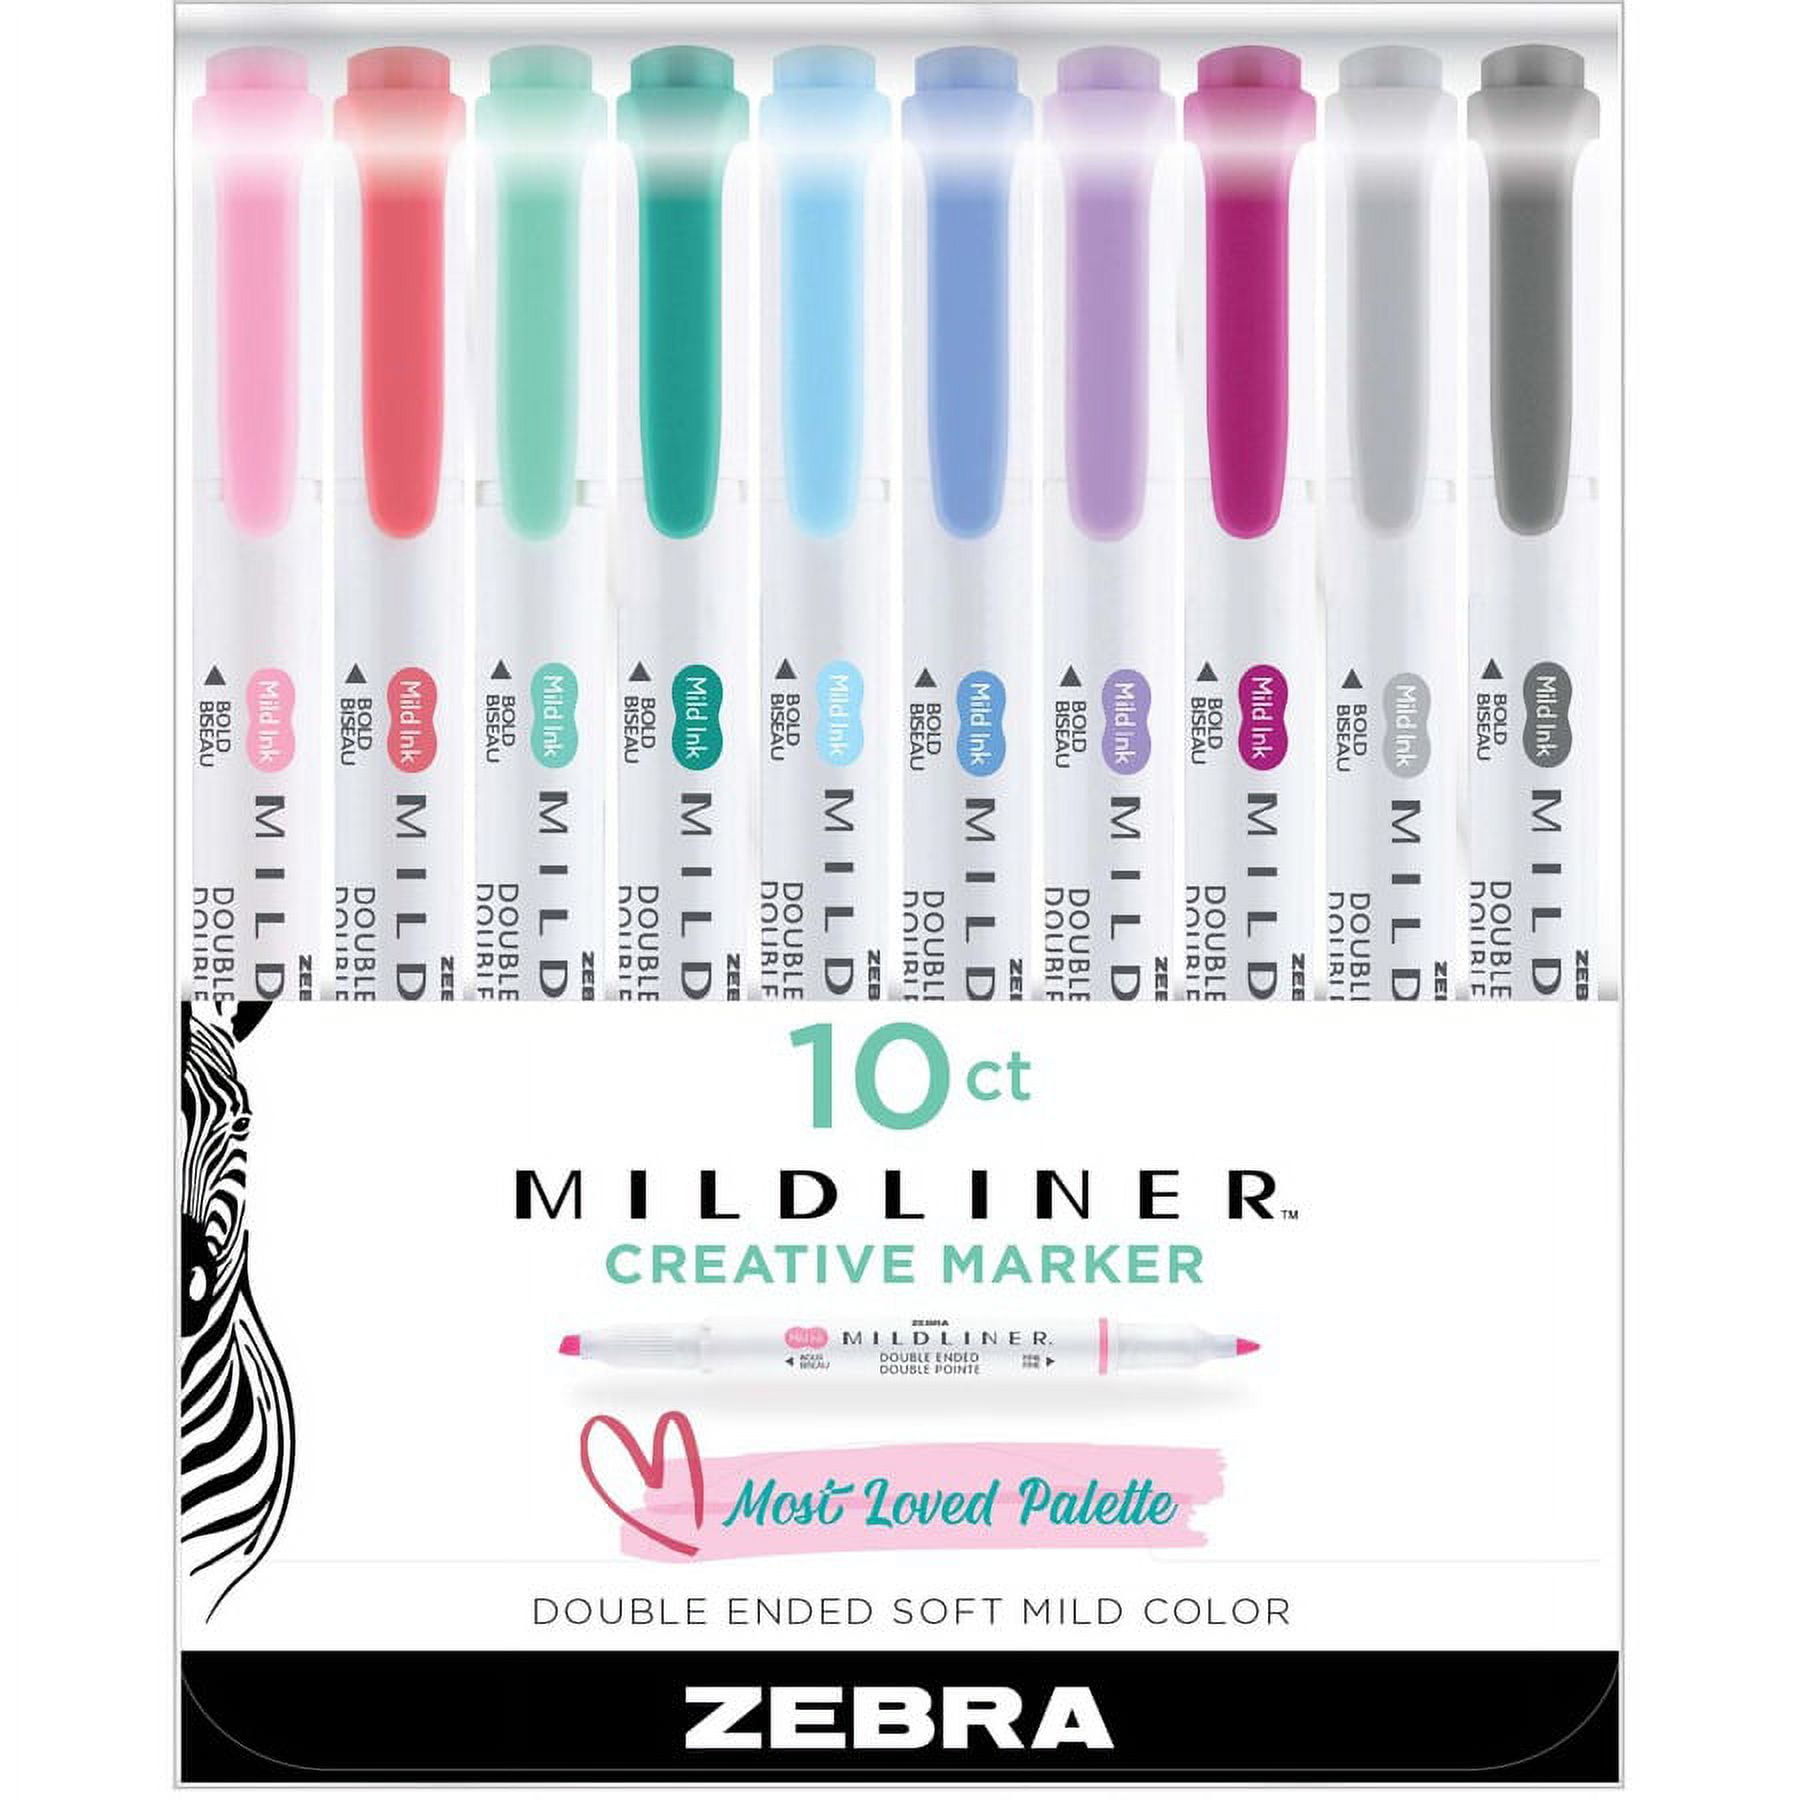  Zebra Mildliner Double-Sided Highlighter Brush - Brush /  Extra Fine - 15 Color Bundle